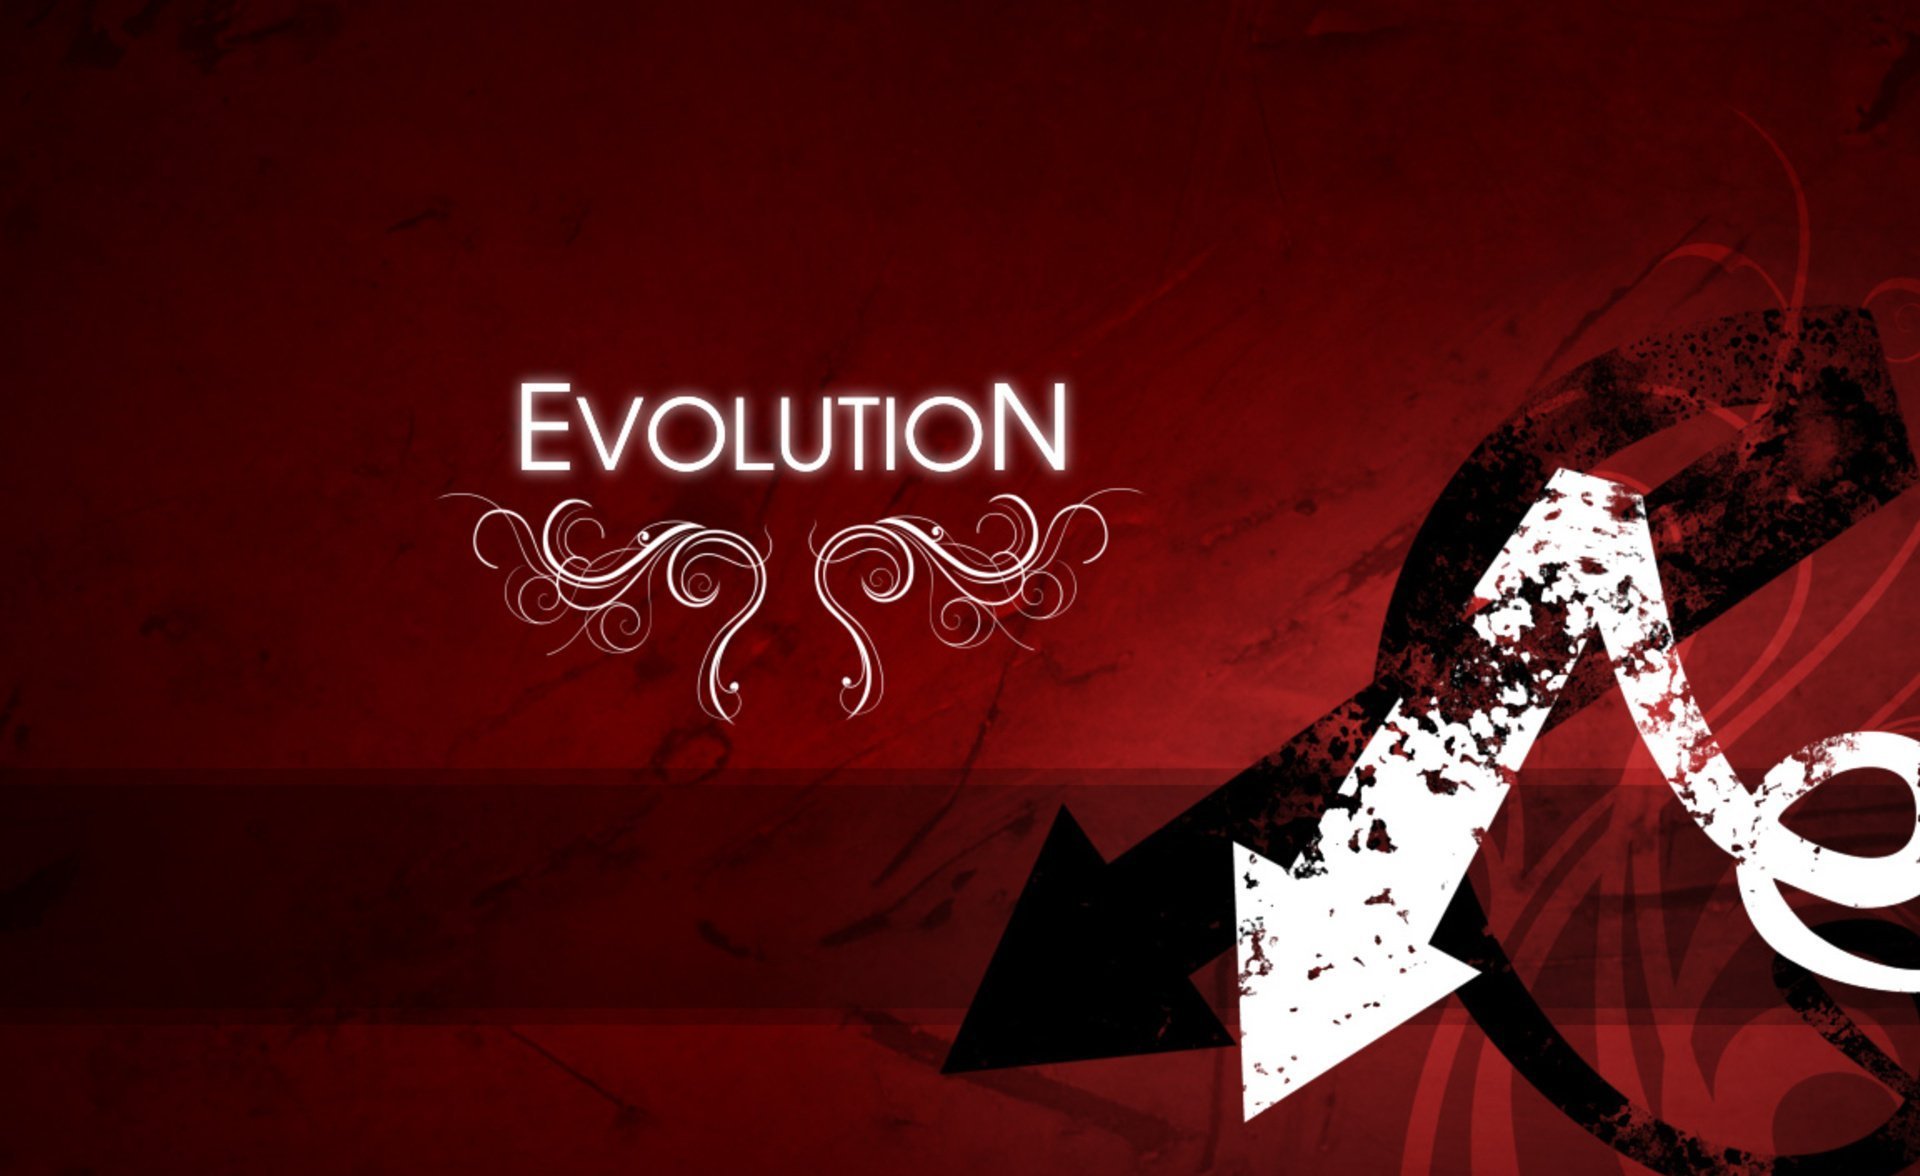 EVOLUTION 2012 DECEMBER 21